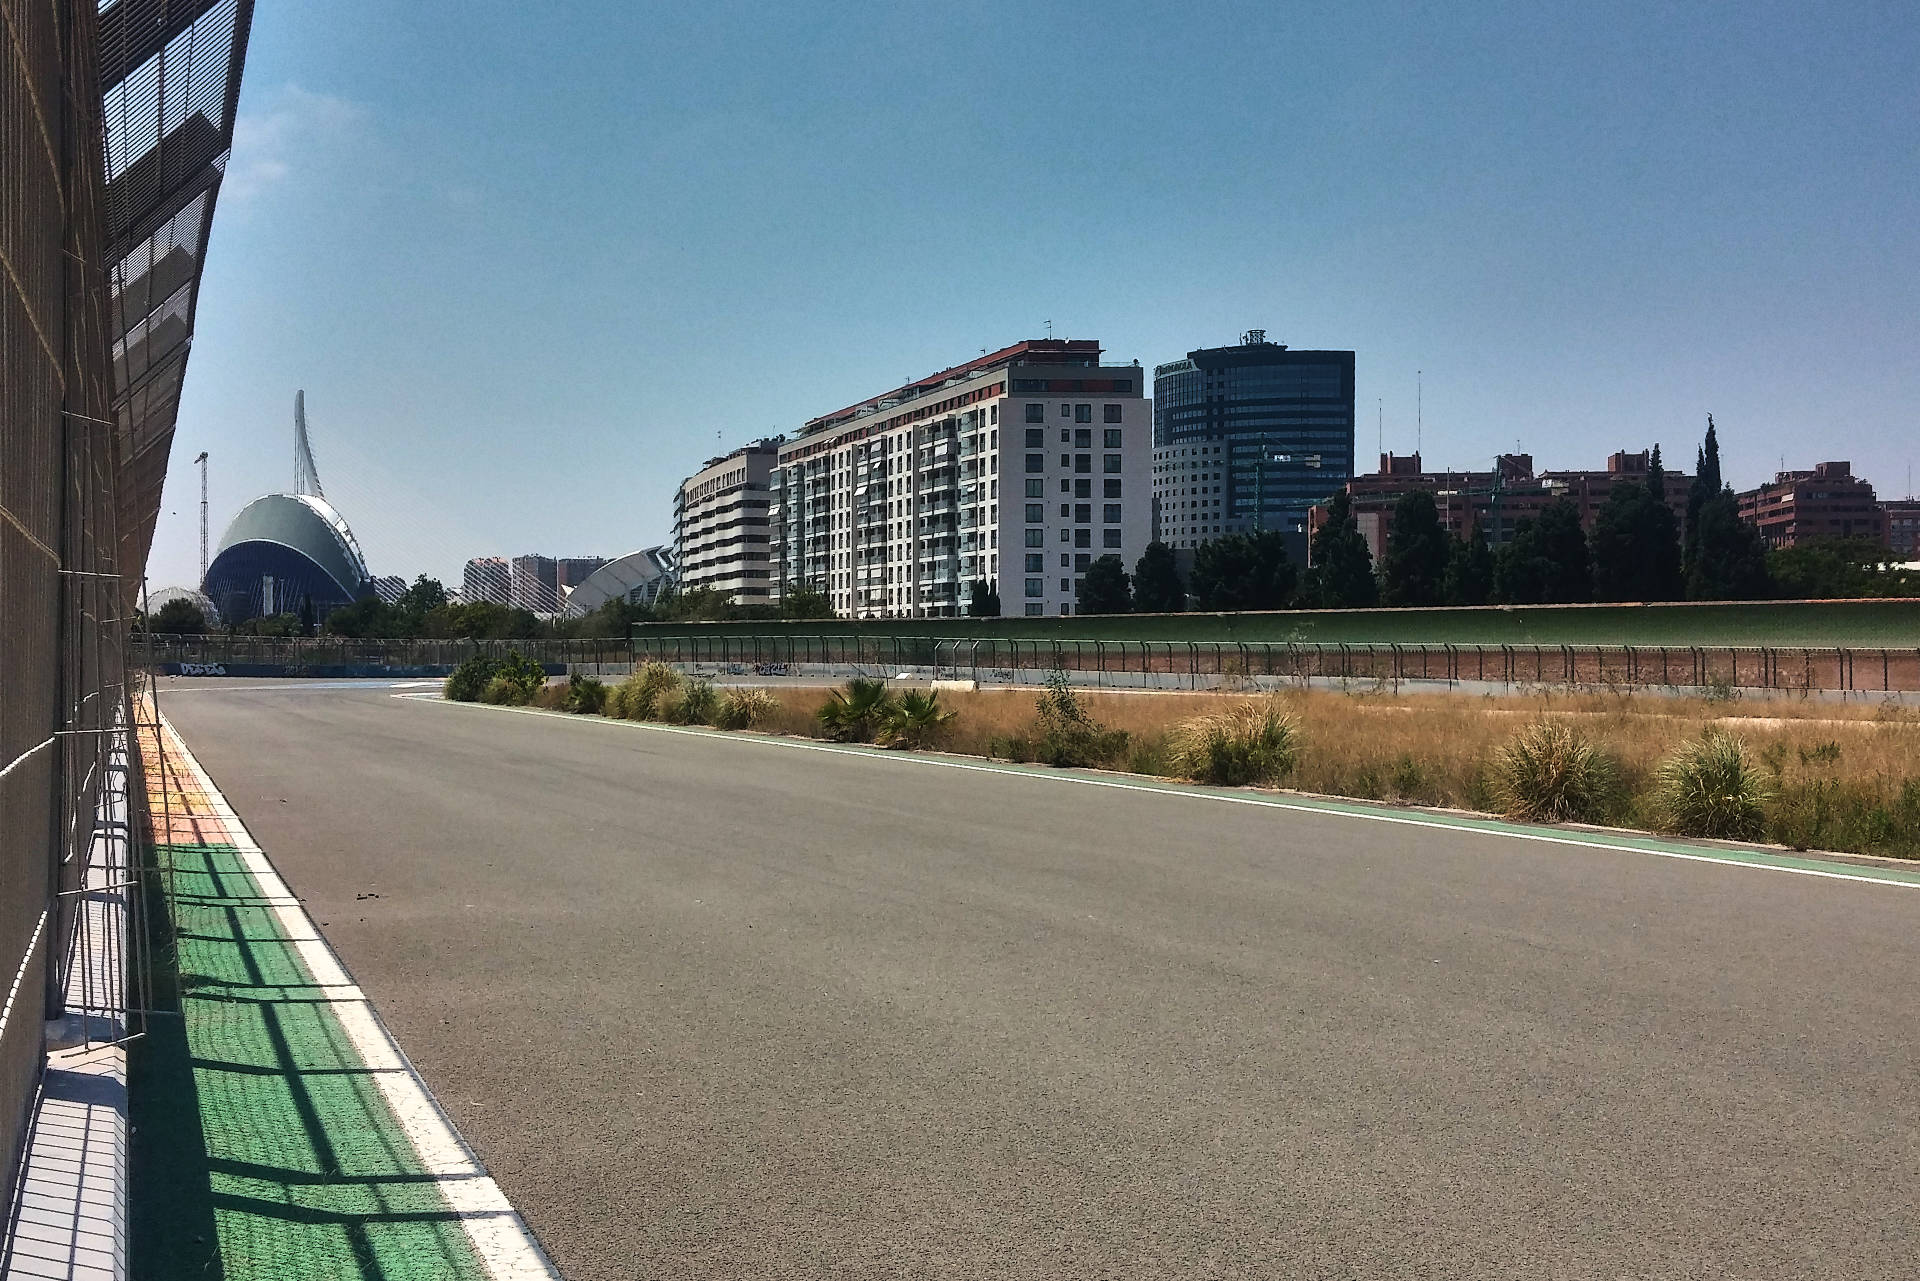 Formel 1 Rennstrecke Valencia Street Circuit.